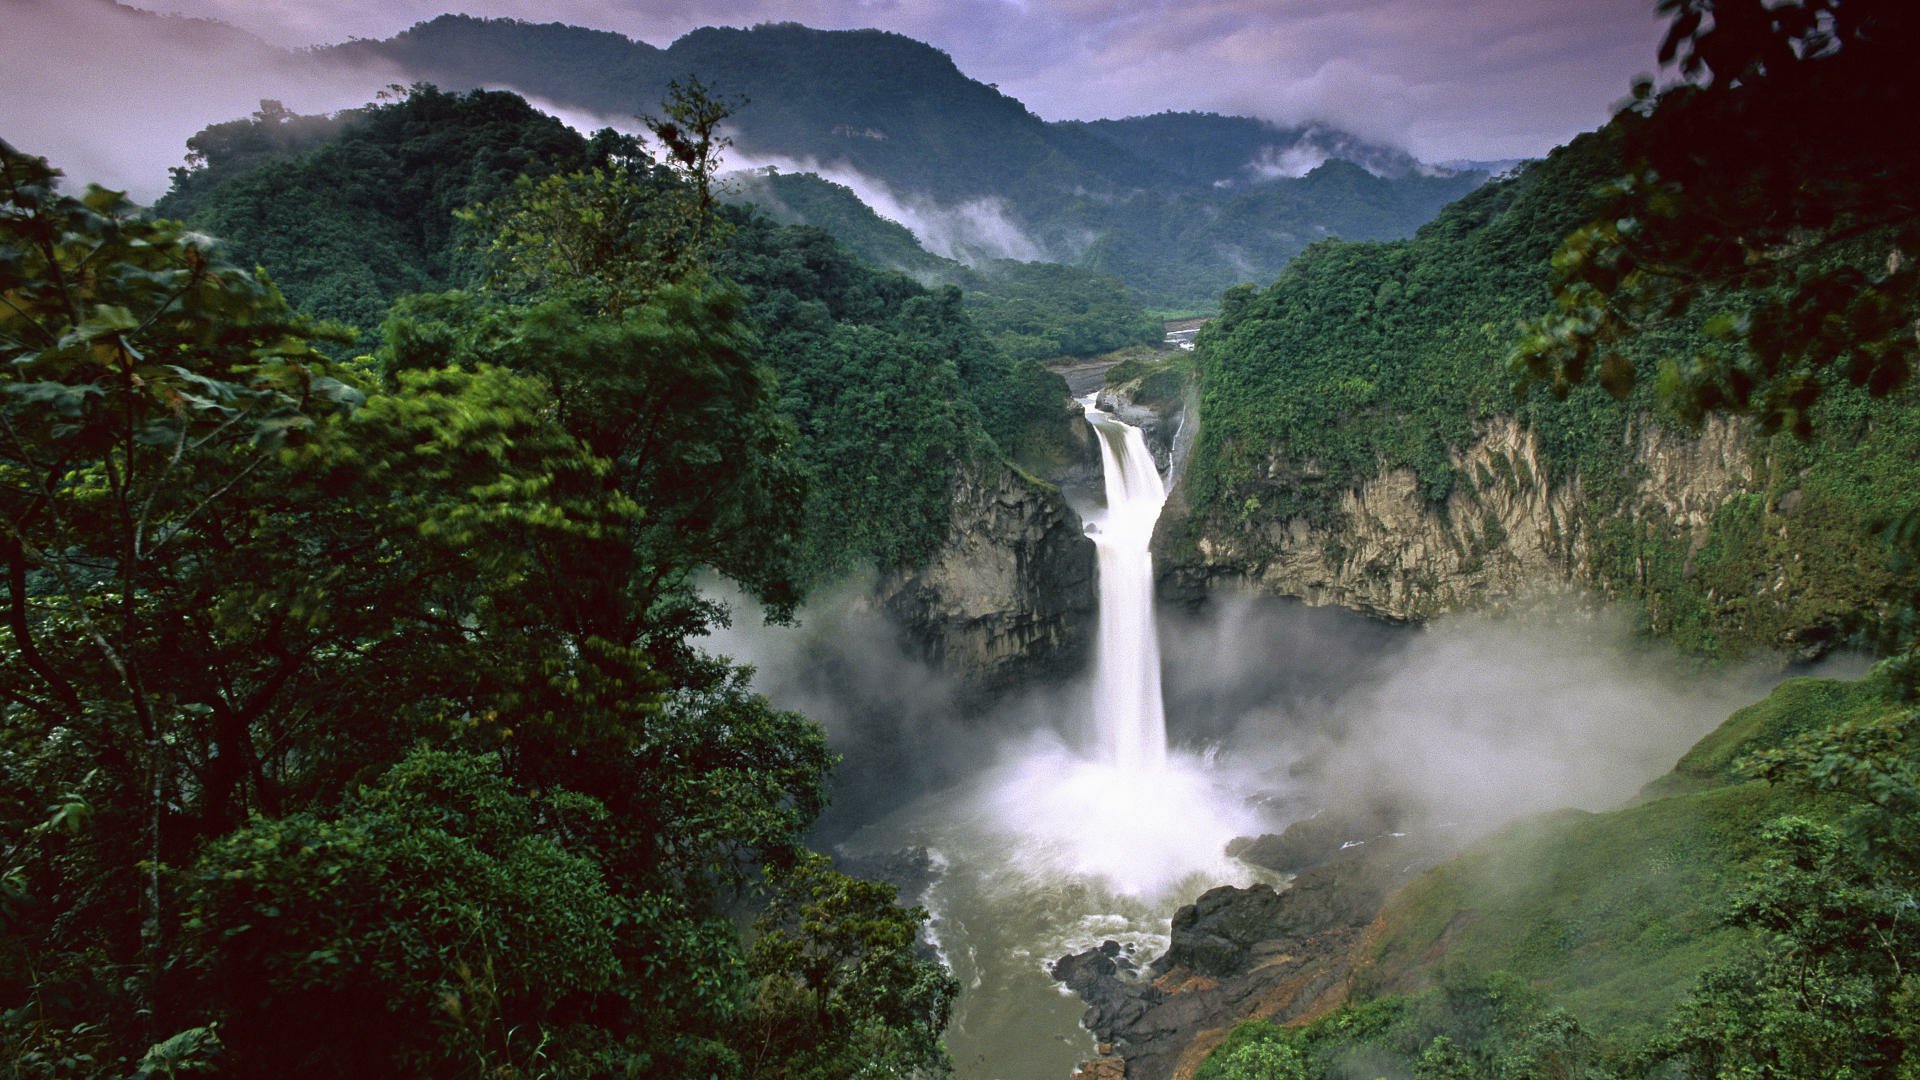 amazon rainforest background